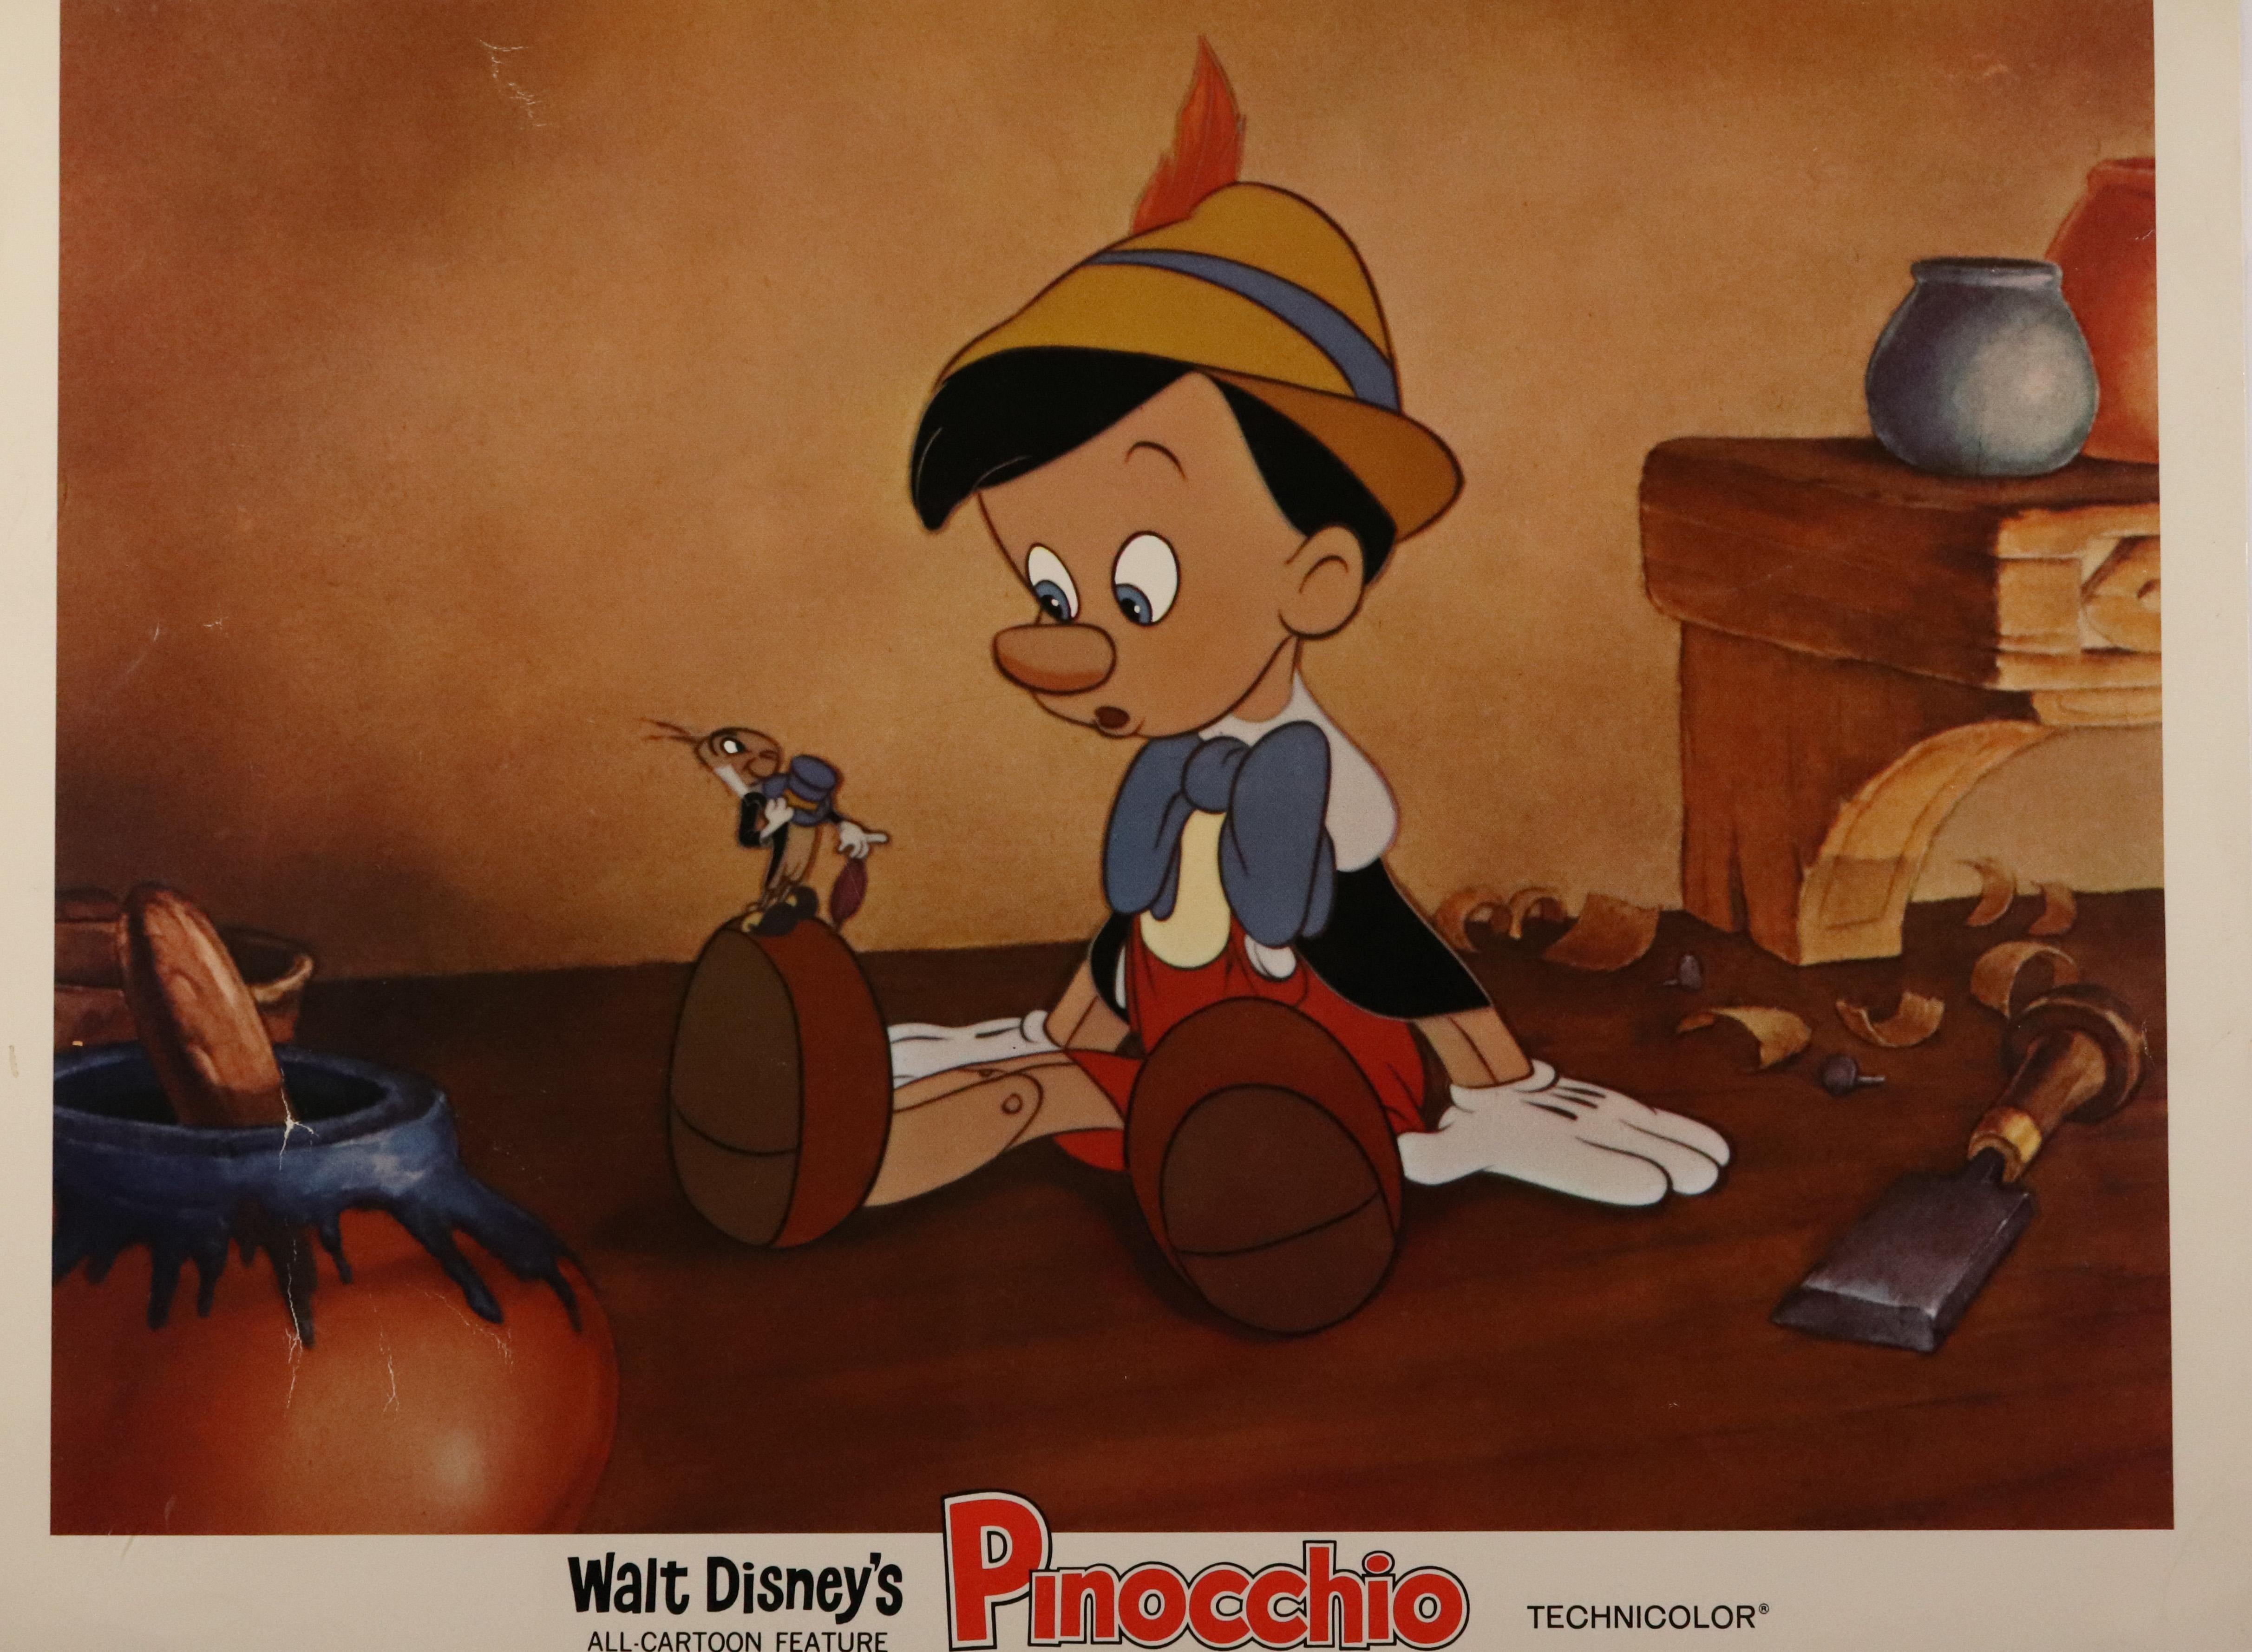 Unknown Abstract Photograph - "Walt Disney's Pinocchio" Lobby Card, USA 1940